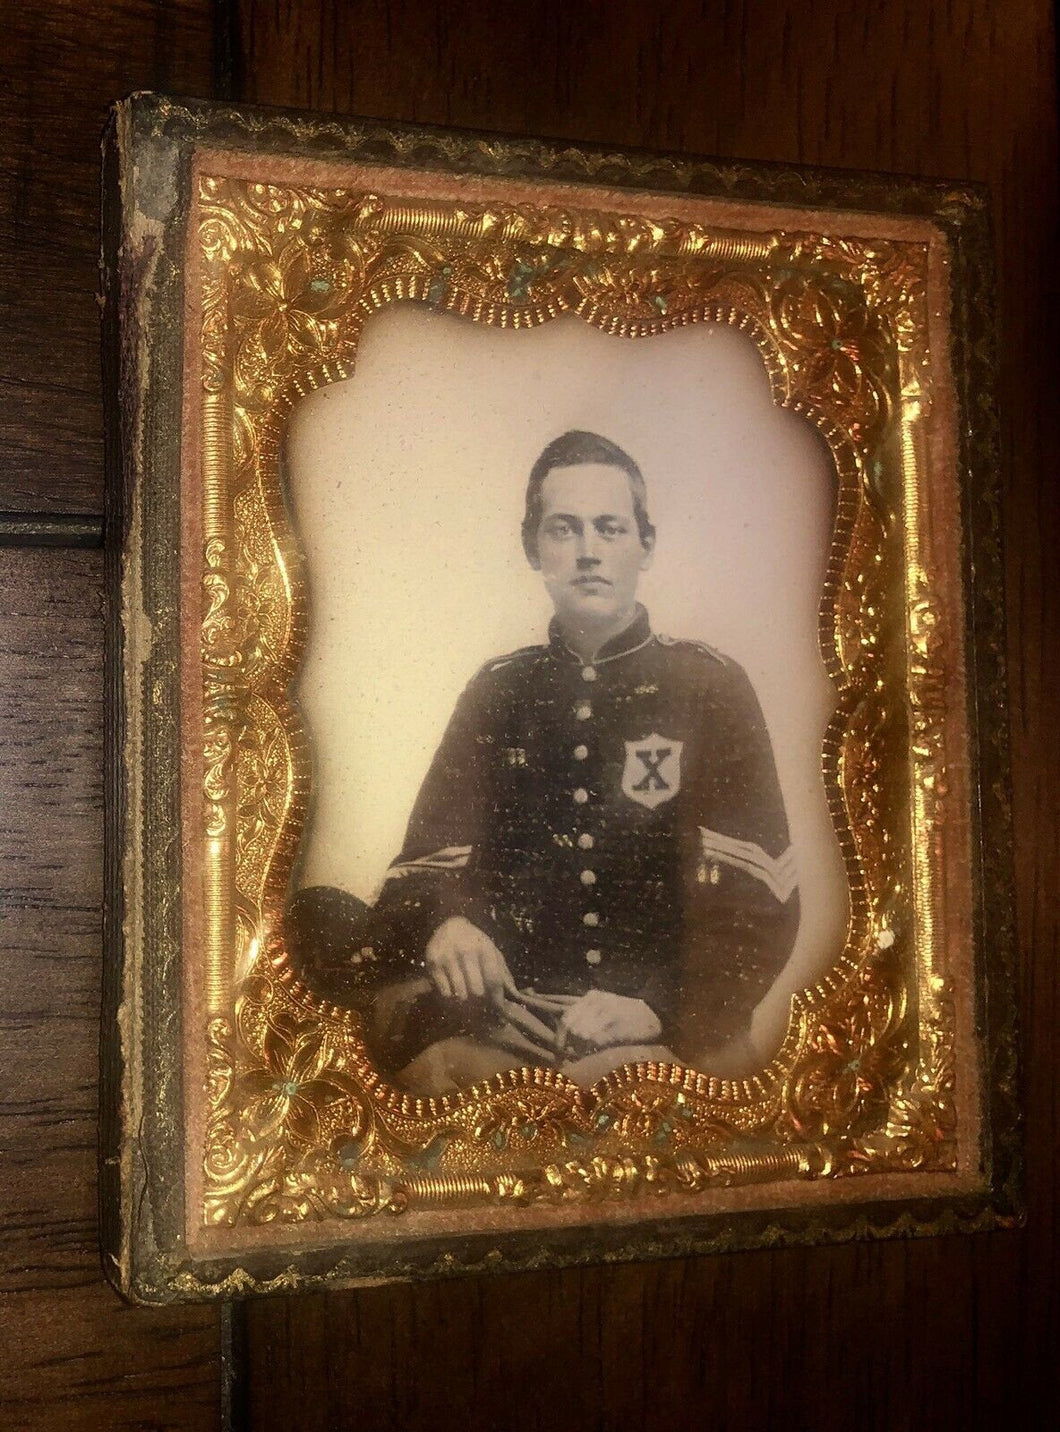 Rare DAGUERREOTYPE Photo Civil War Soldier Black X Patch 10th Legion 56 New York